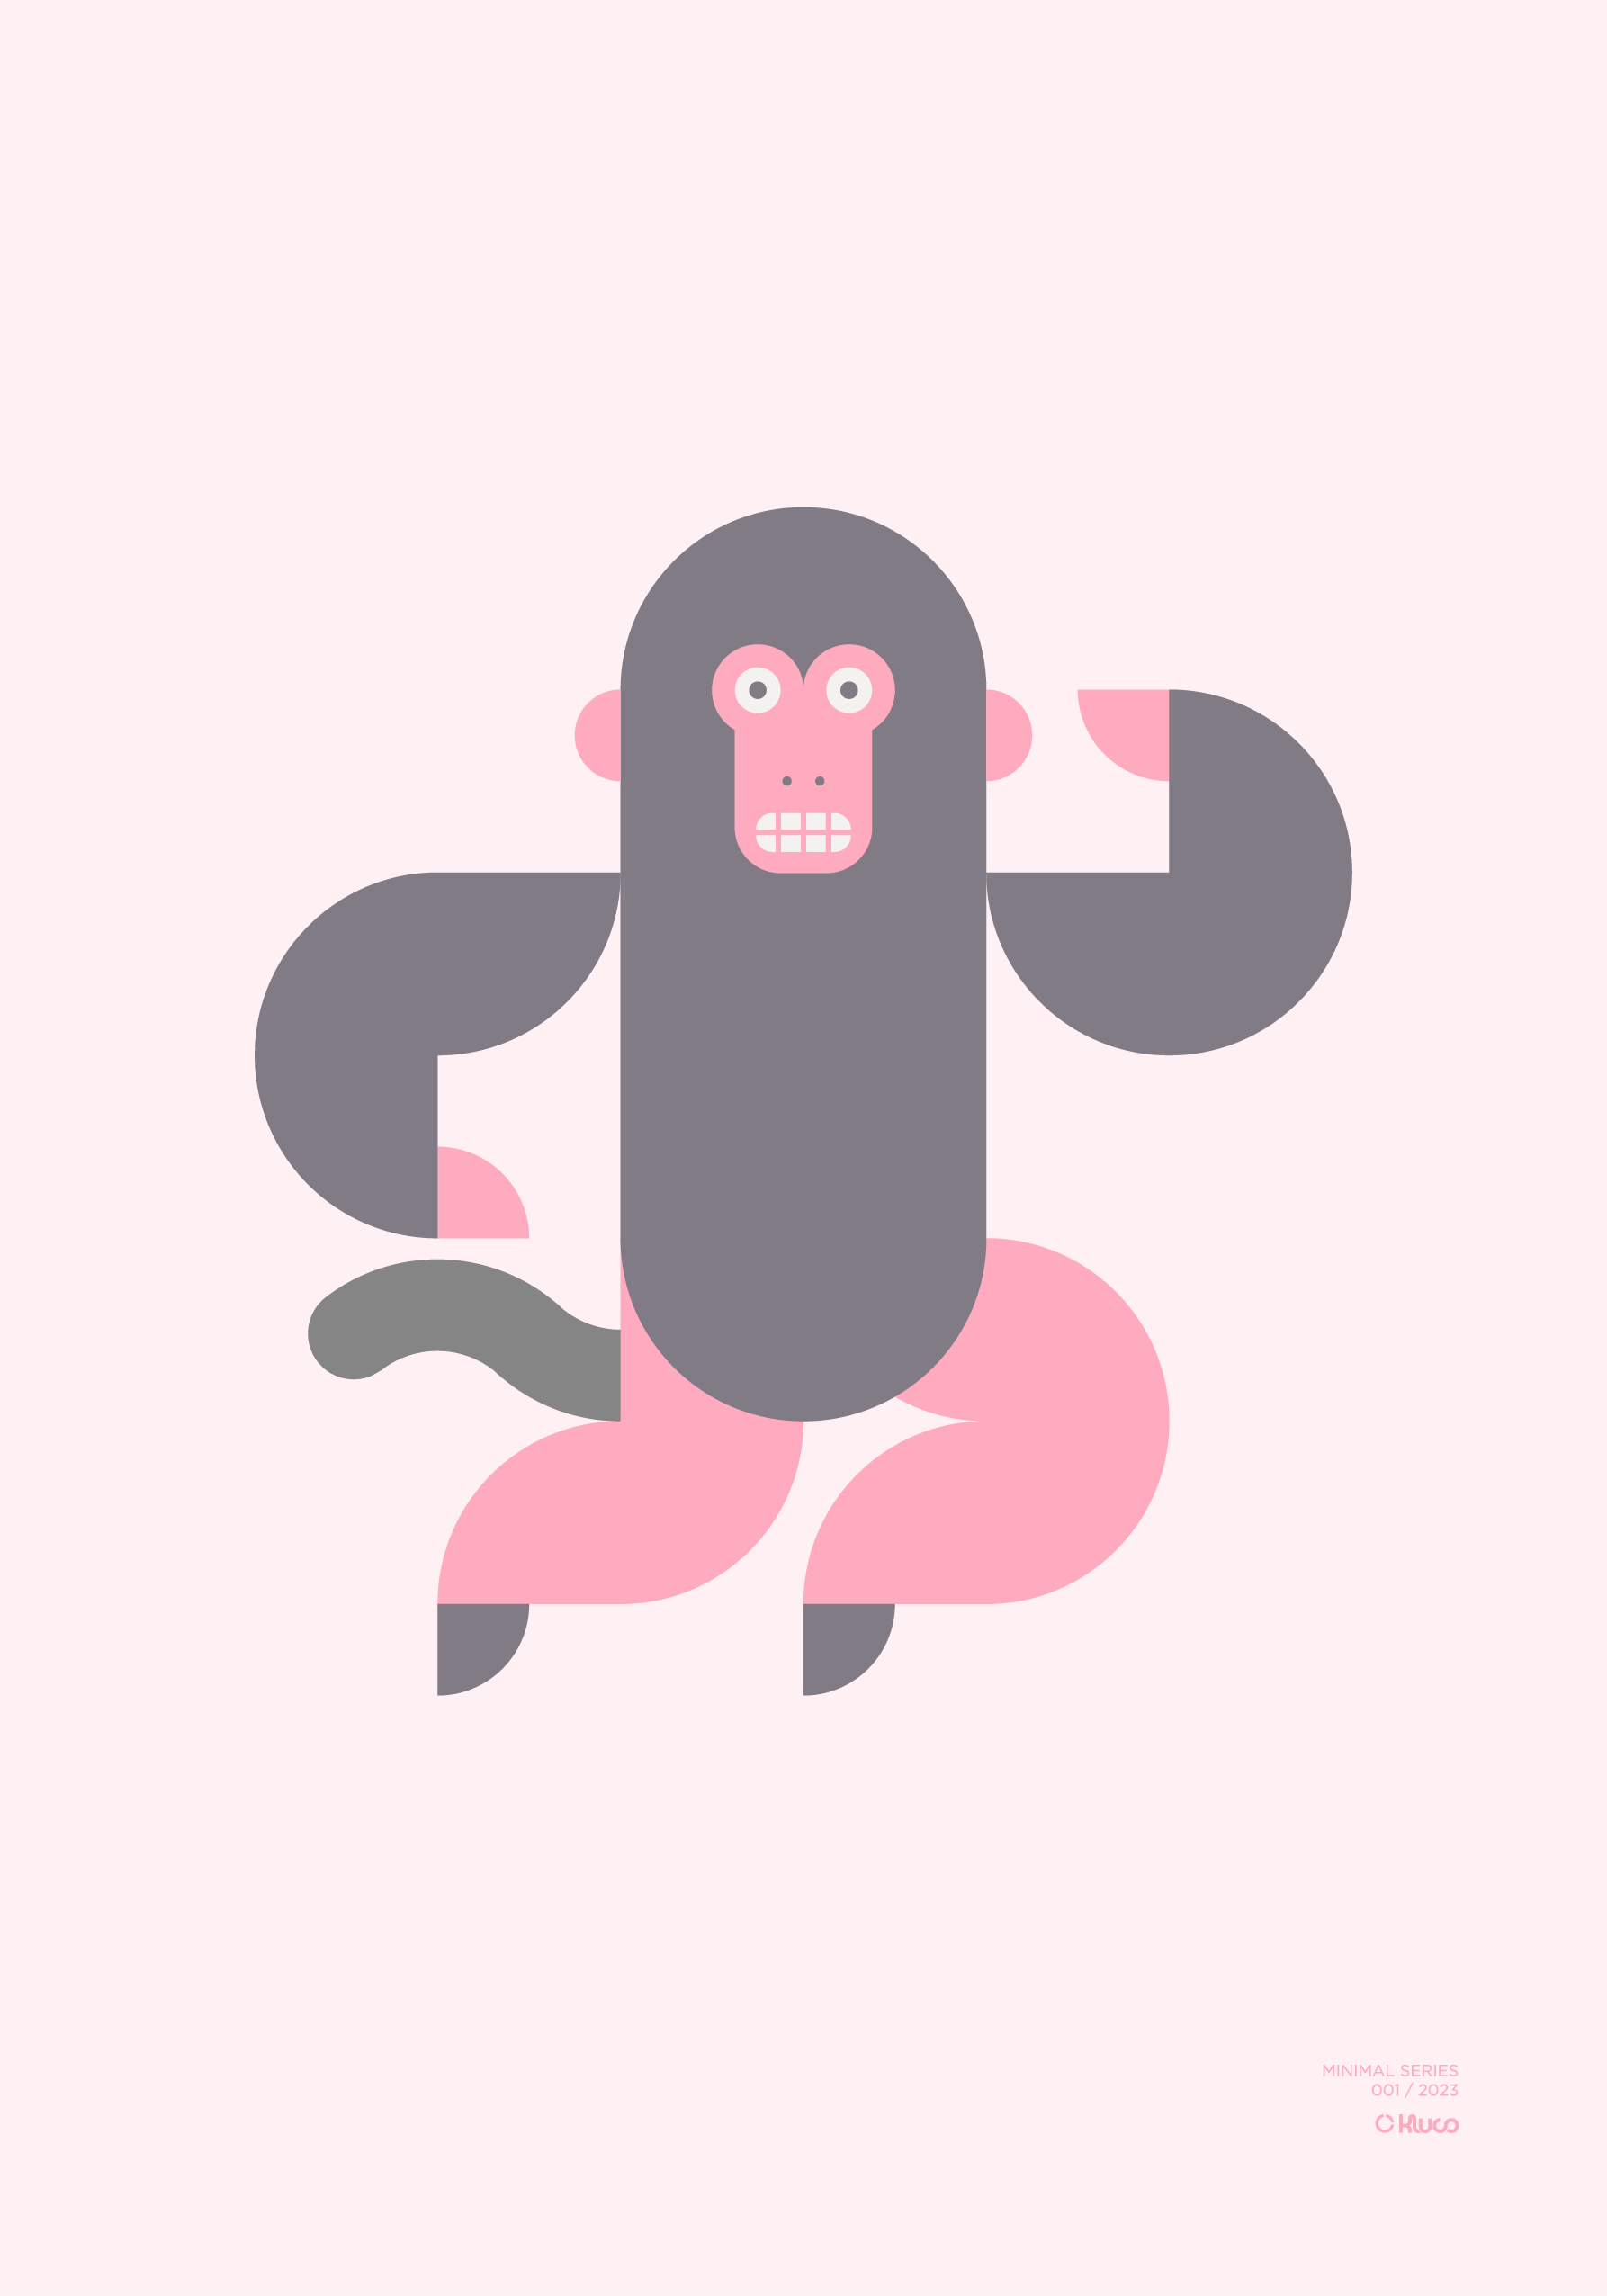 Minimalist-style poster of a monkey